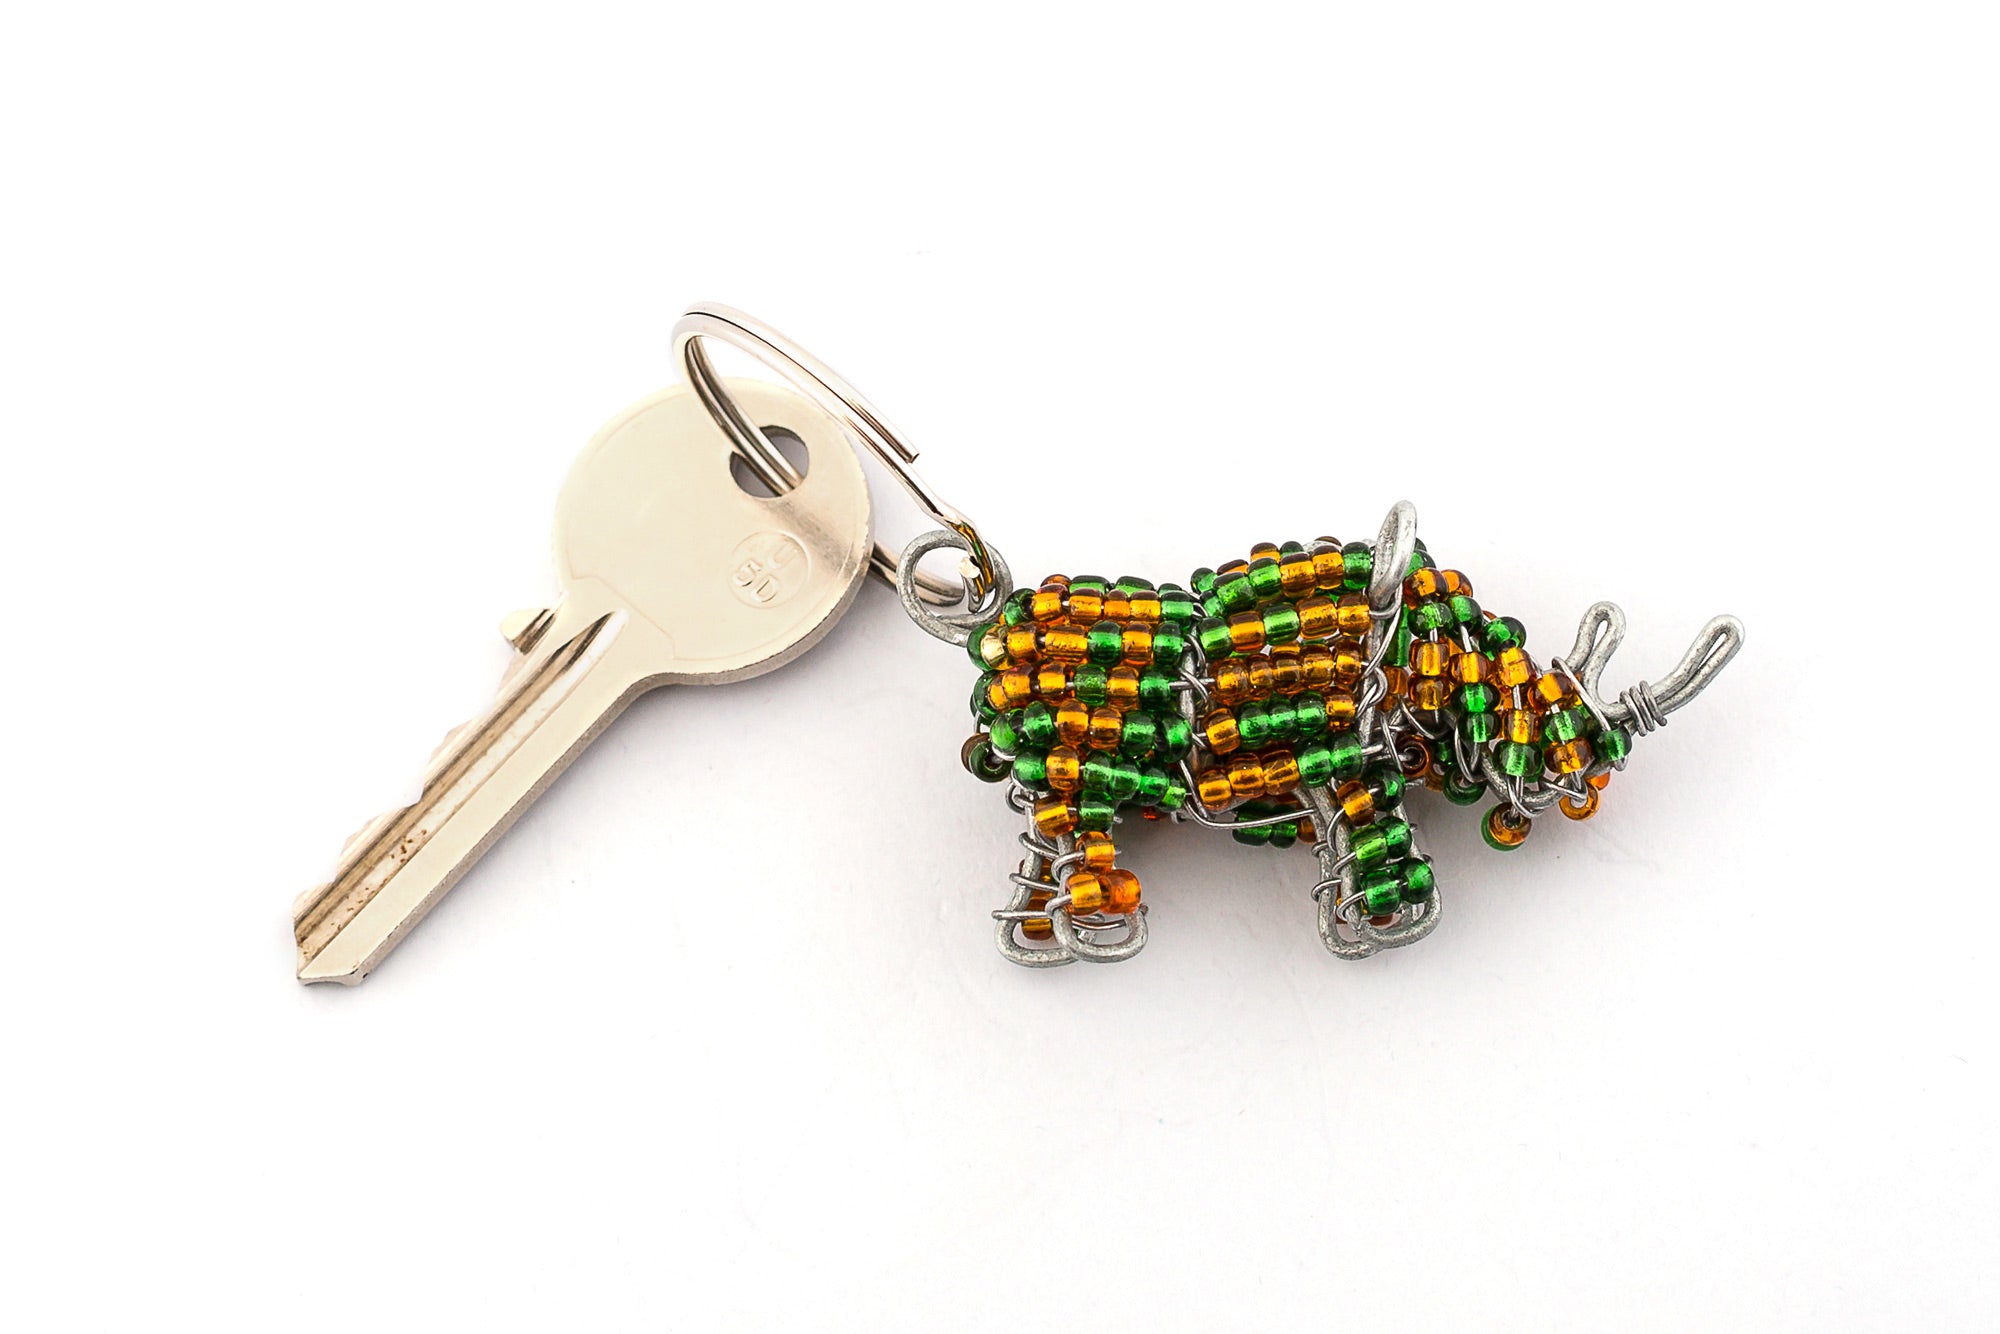 Beaded rhino key chain.  Handmade with green & brown beads. So cute.  